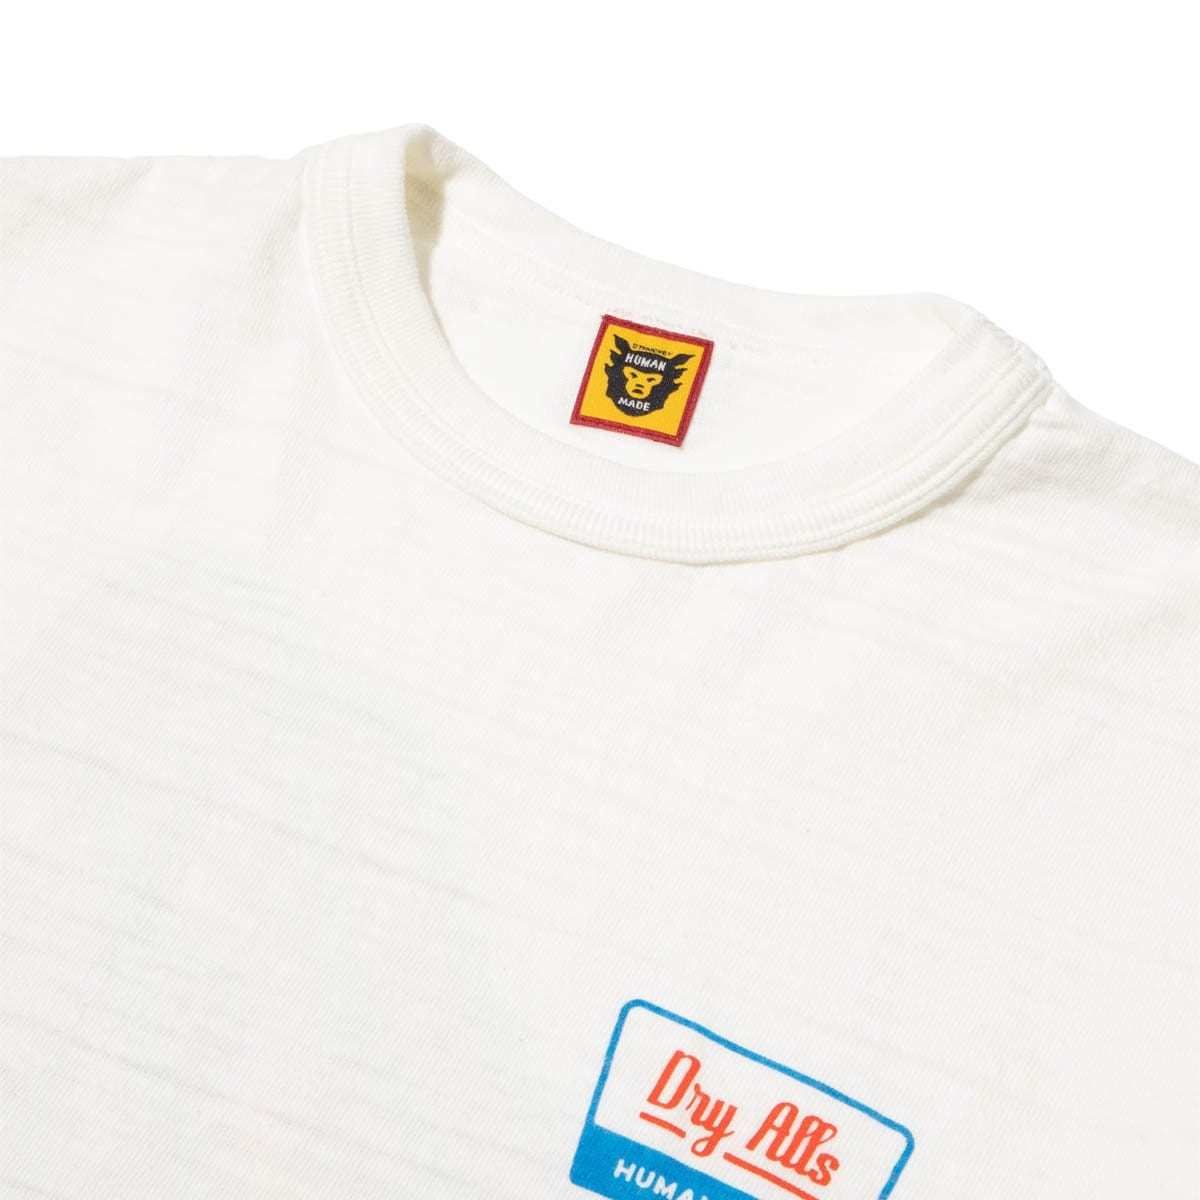 Human Made T-Shirts T-SHIRT #2012